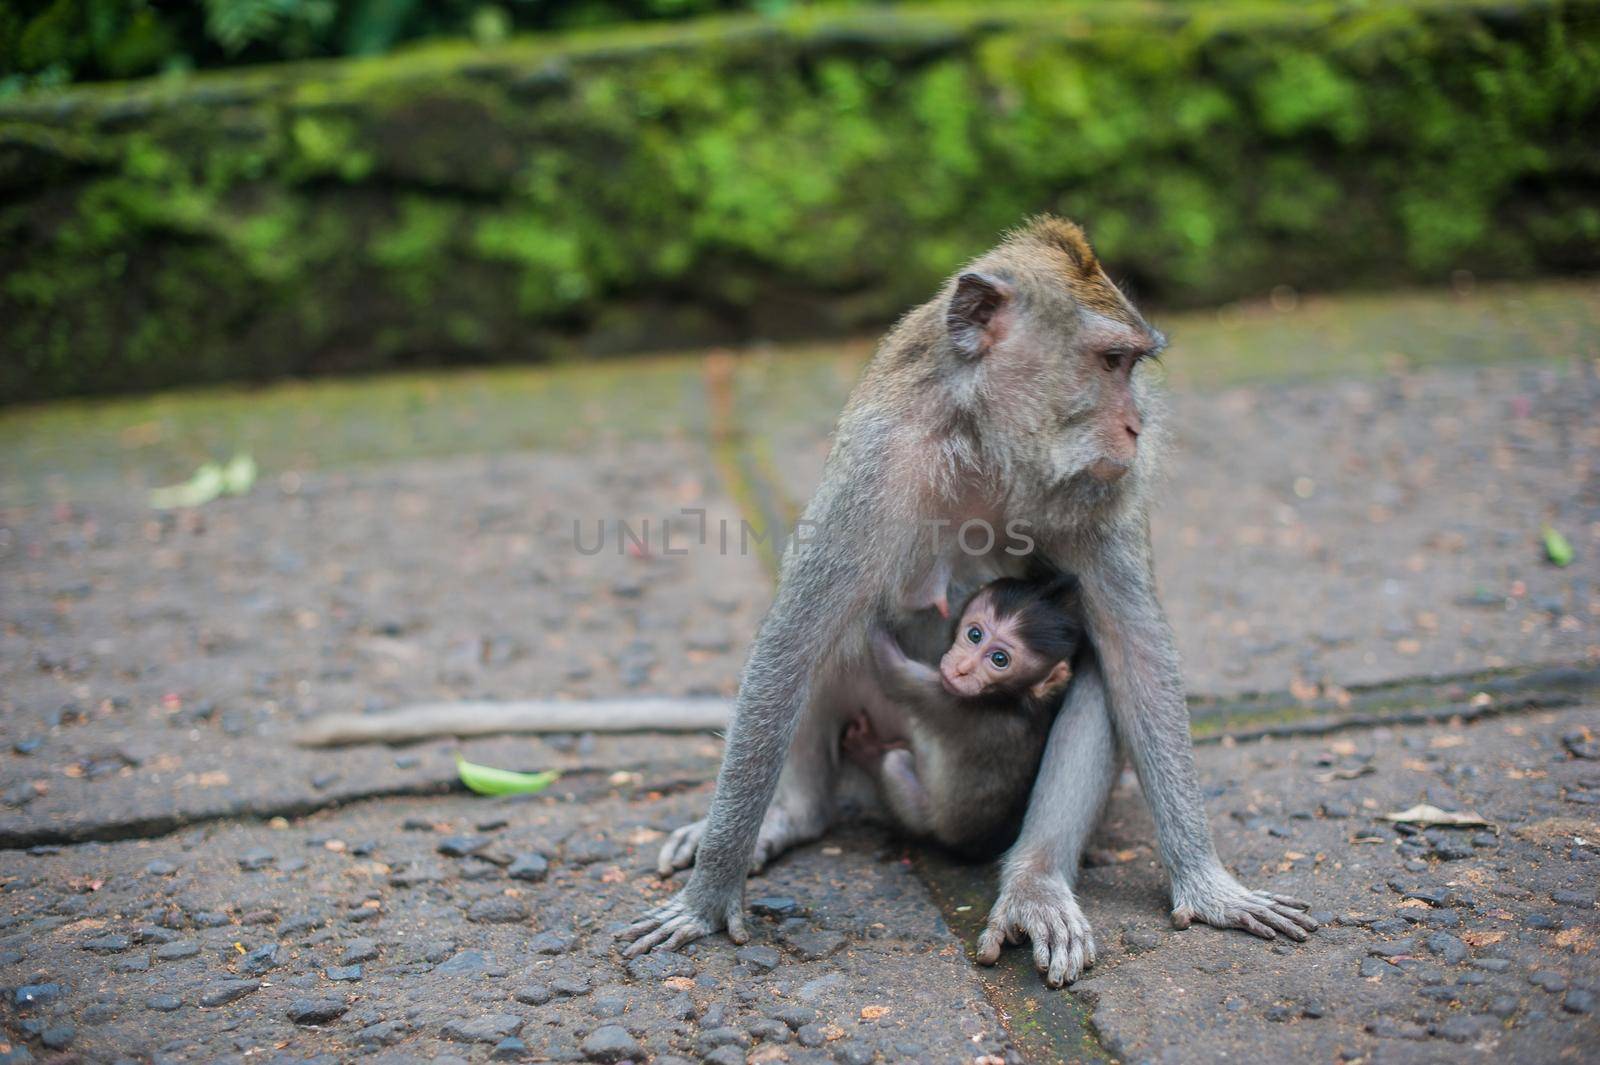 Monkeys in the monkey forest, Bali, Indonesia